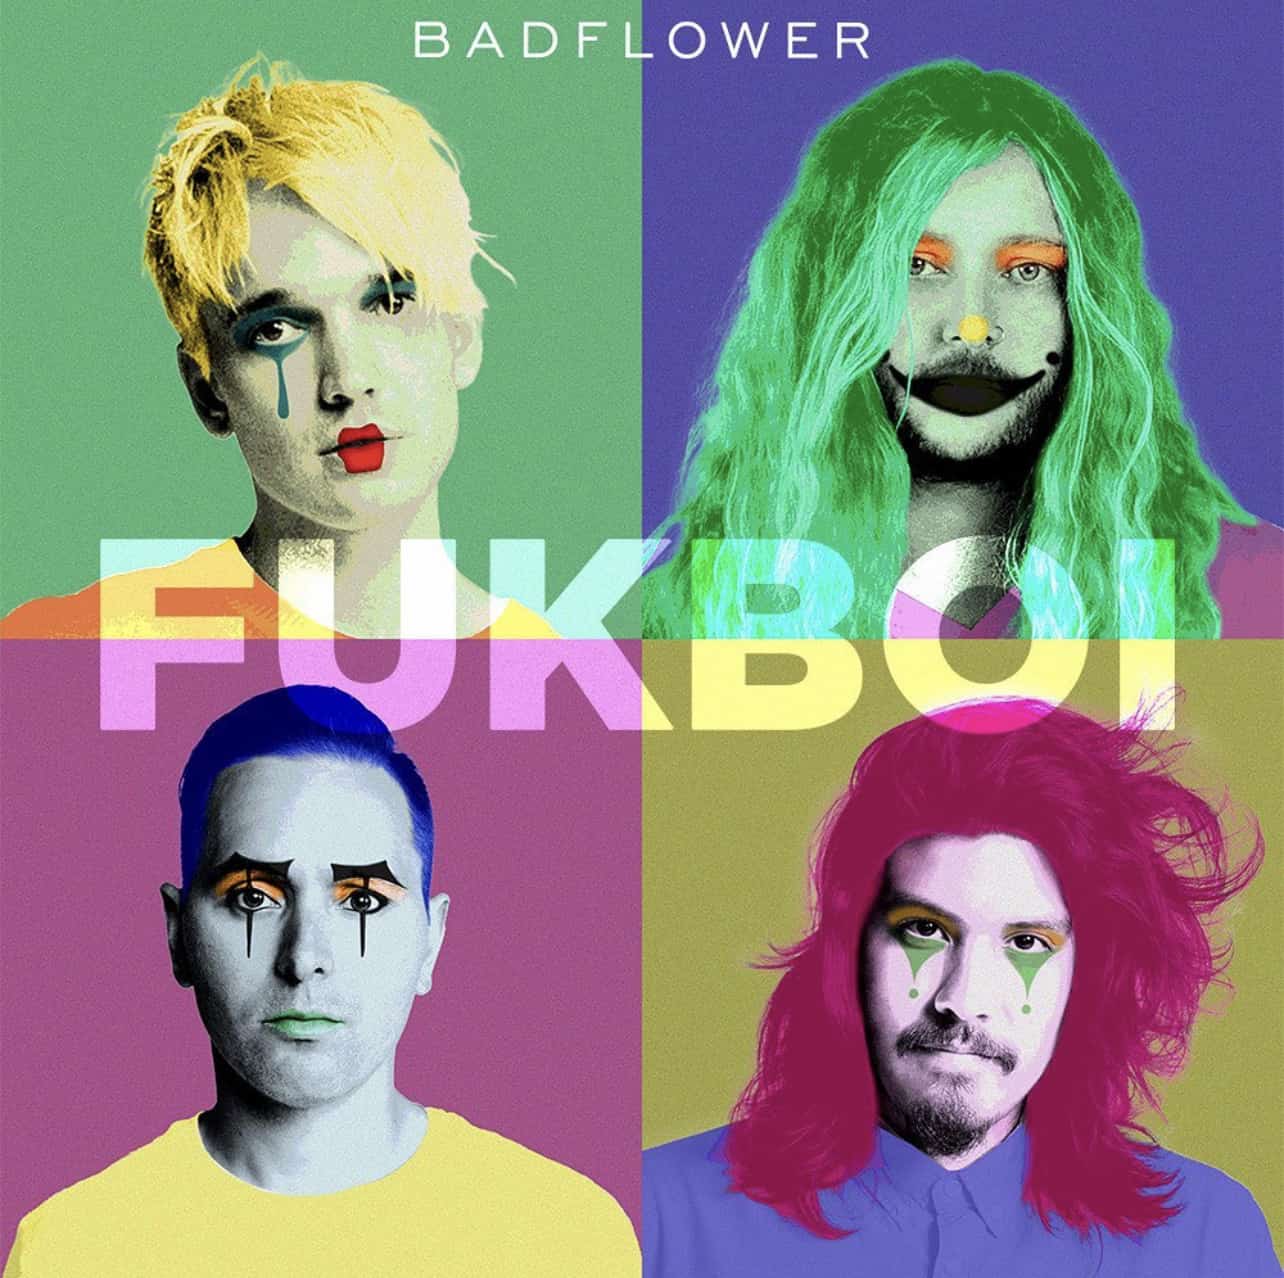 The Band Badflower